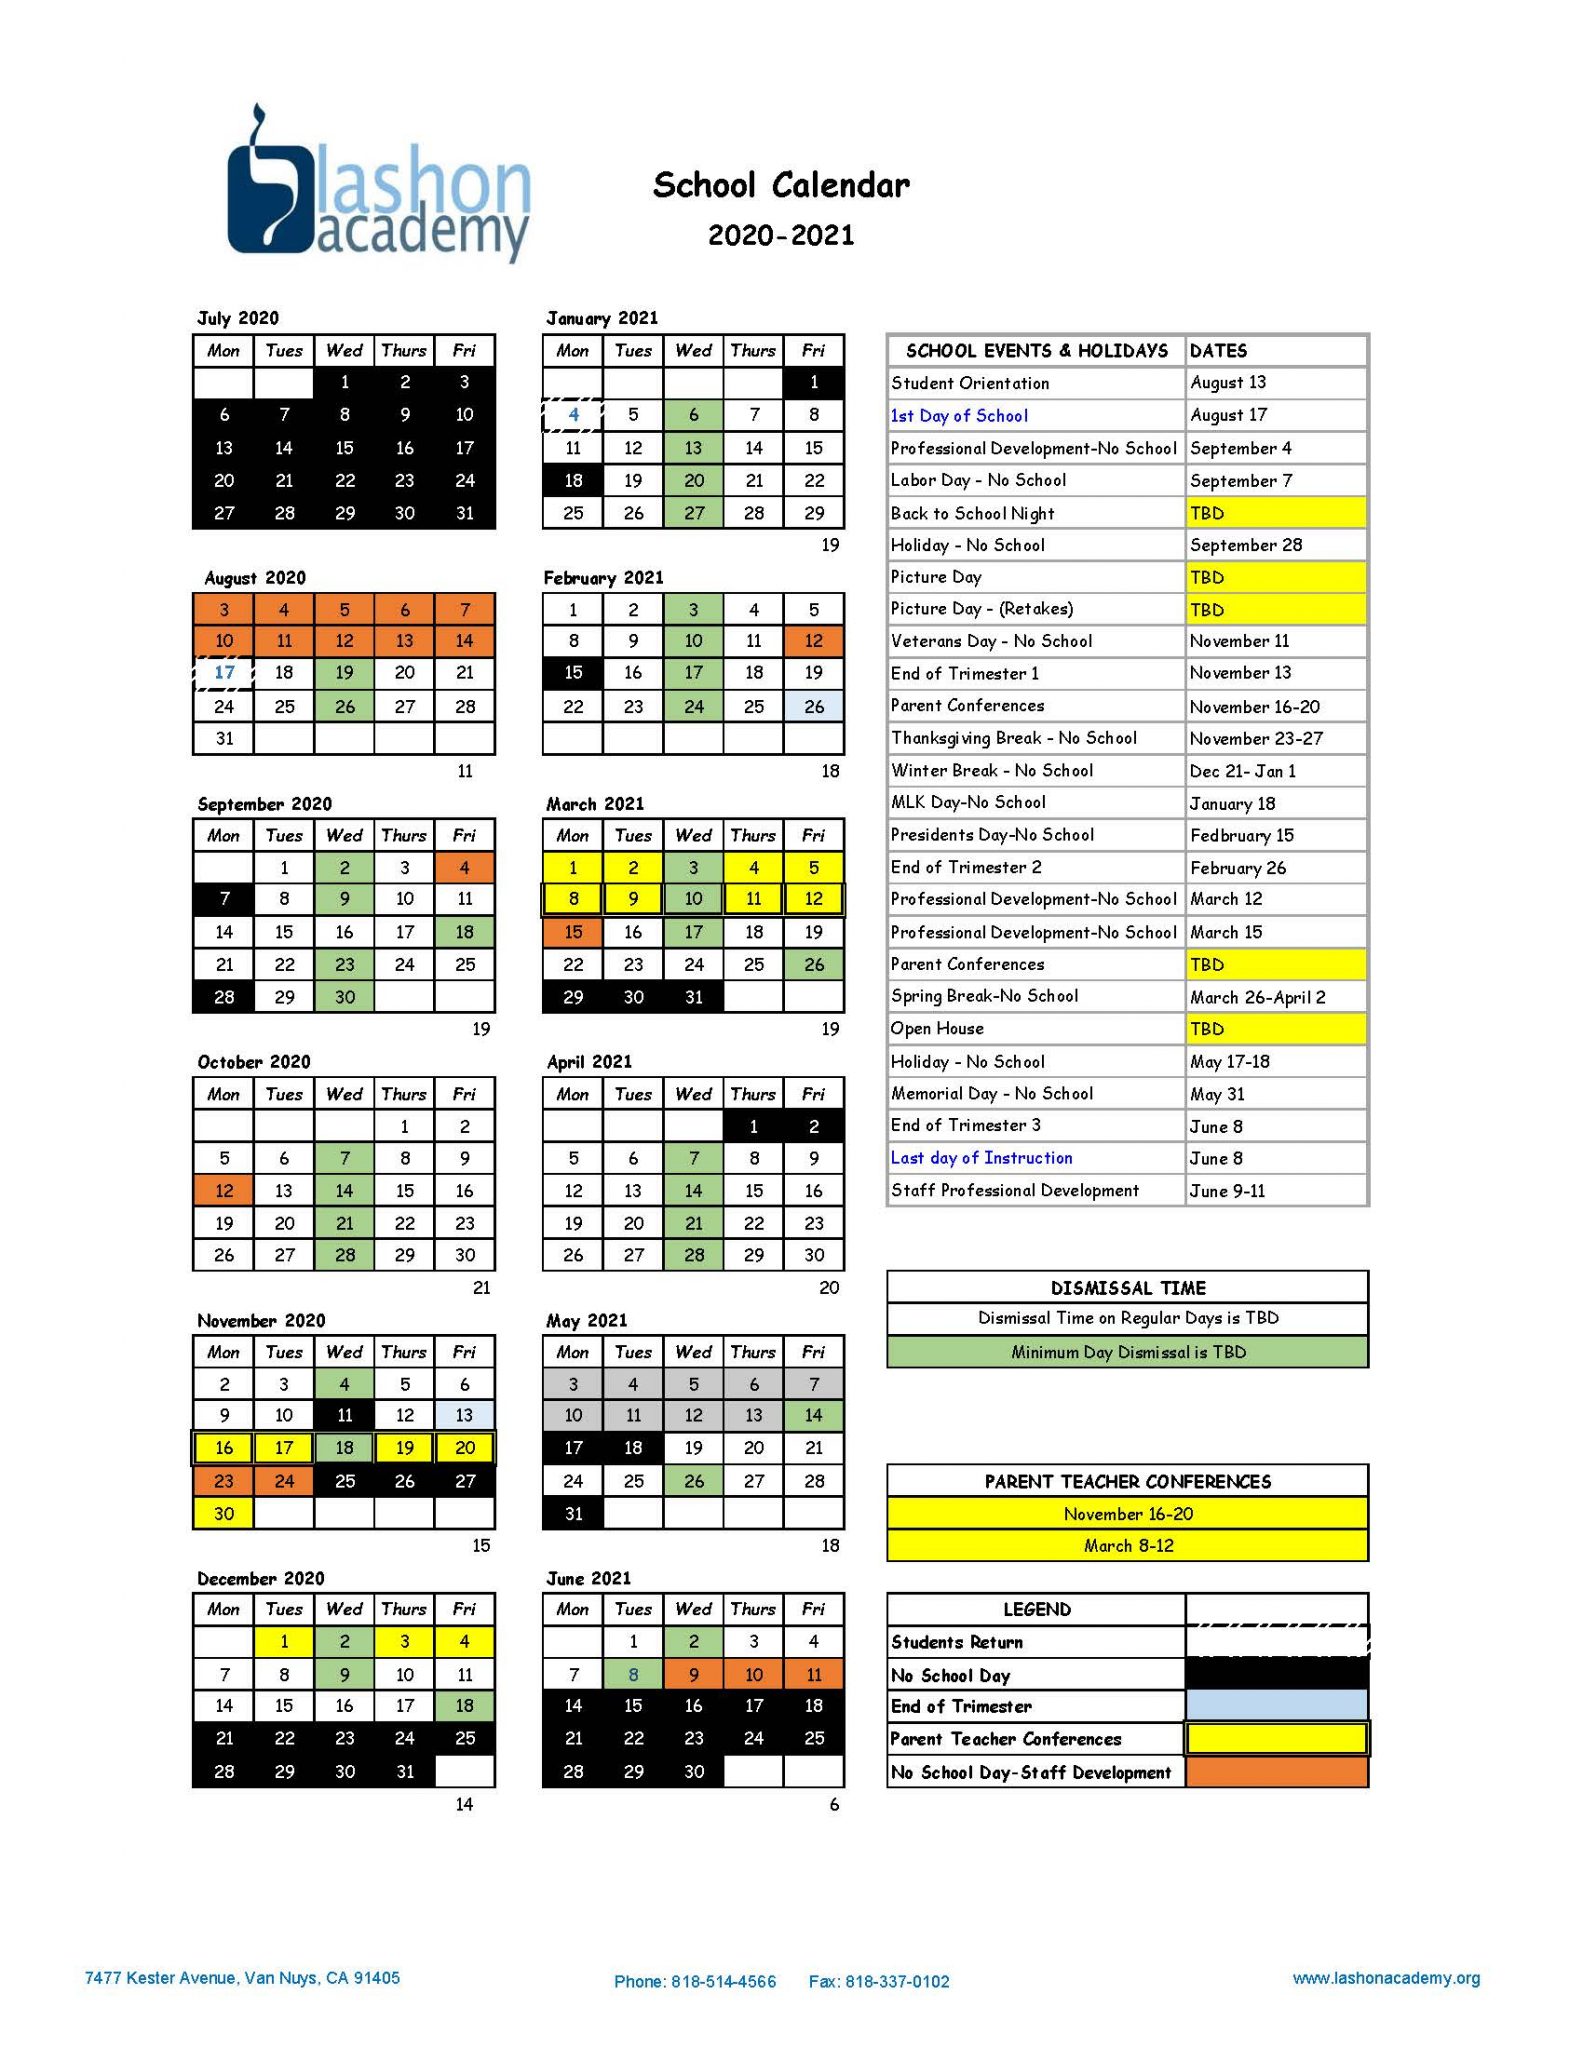 School Calendar (City) – Lashon Academy